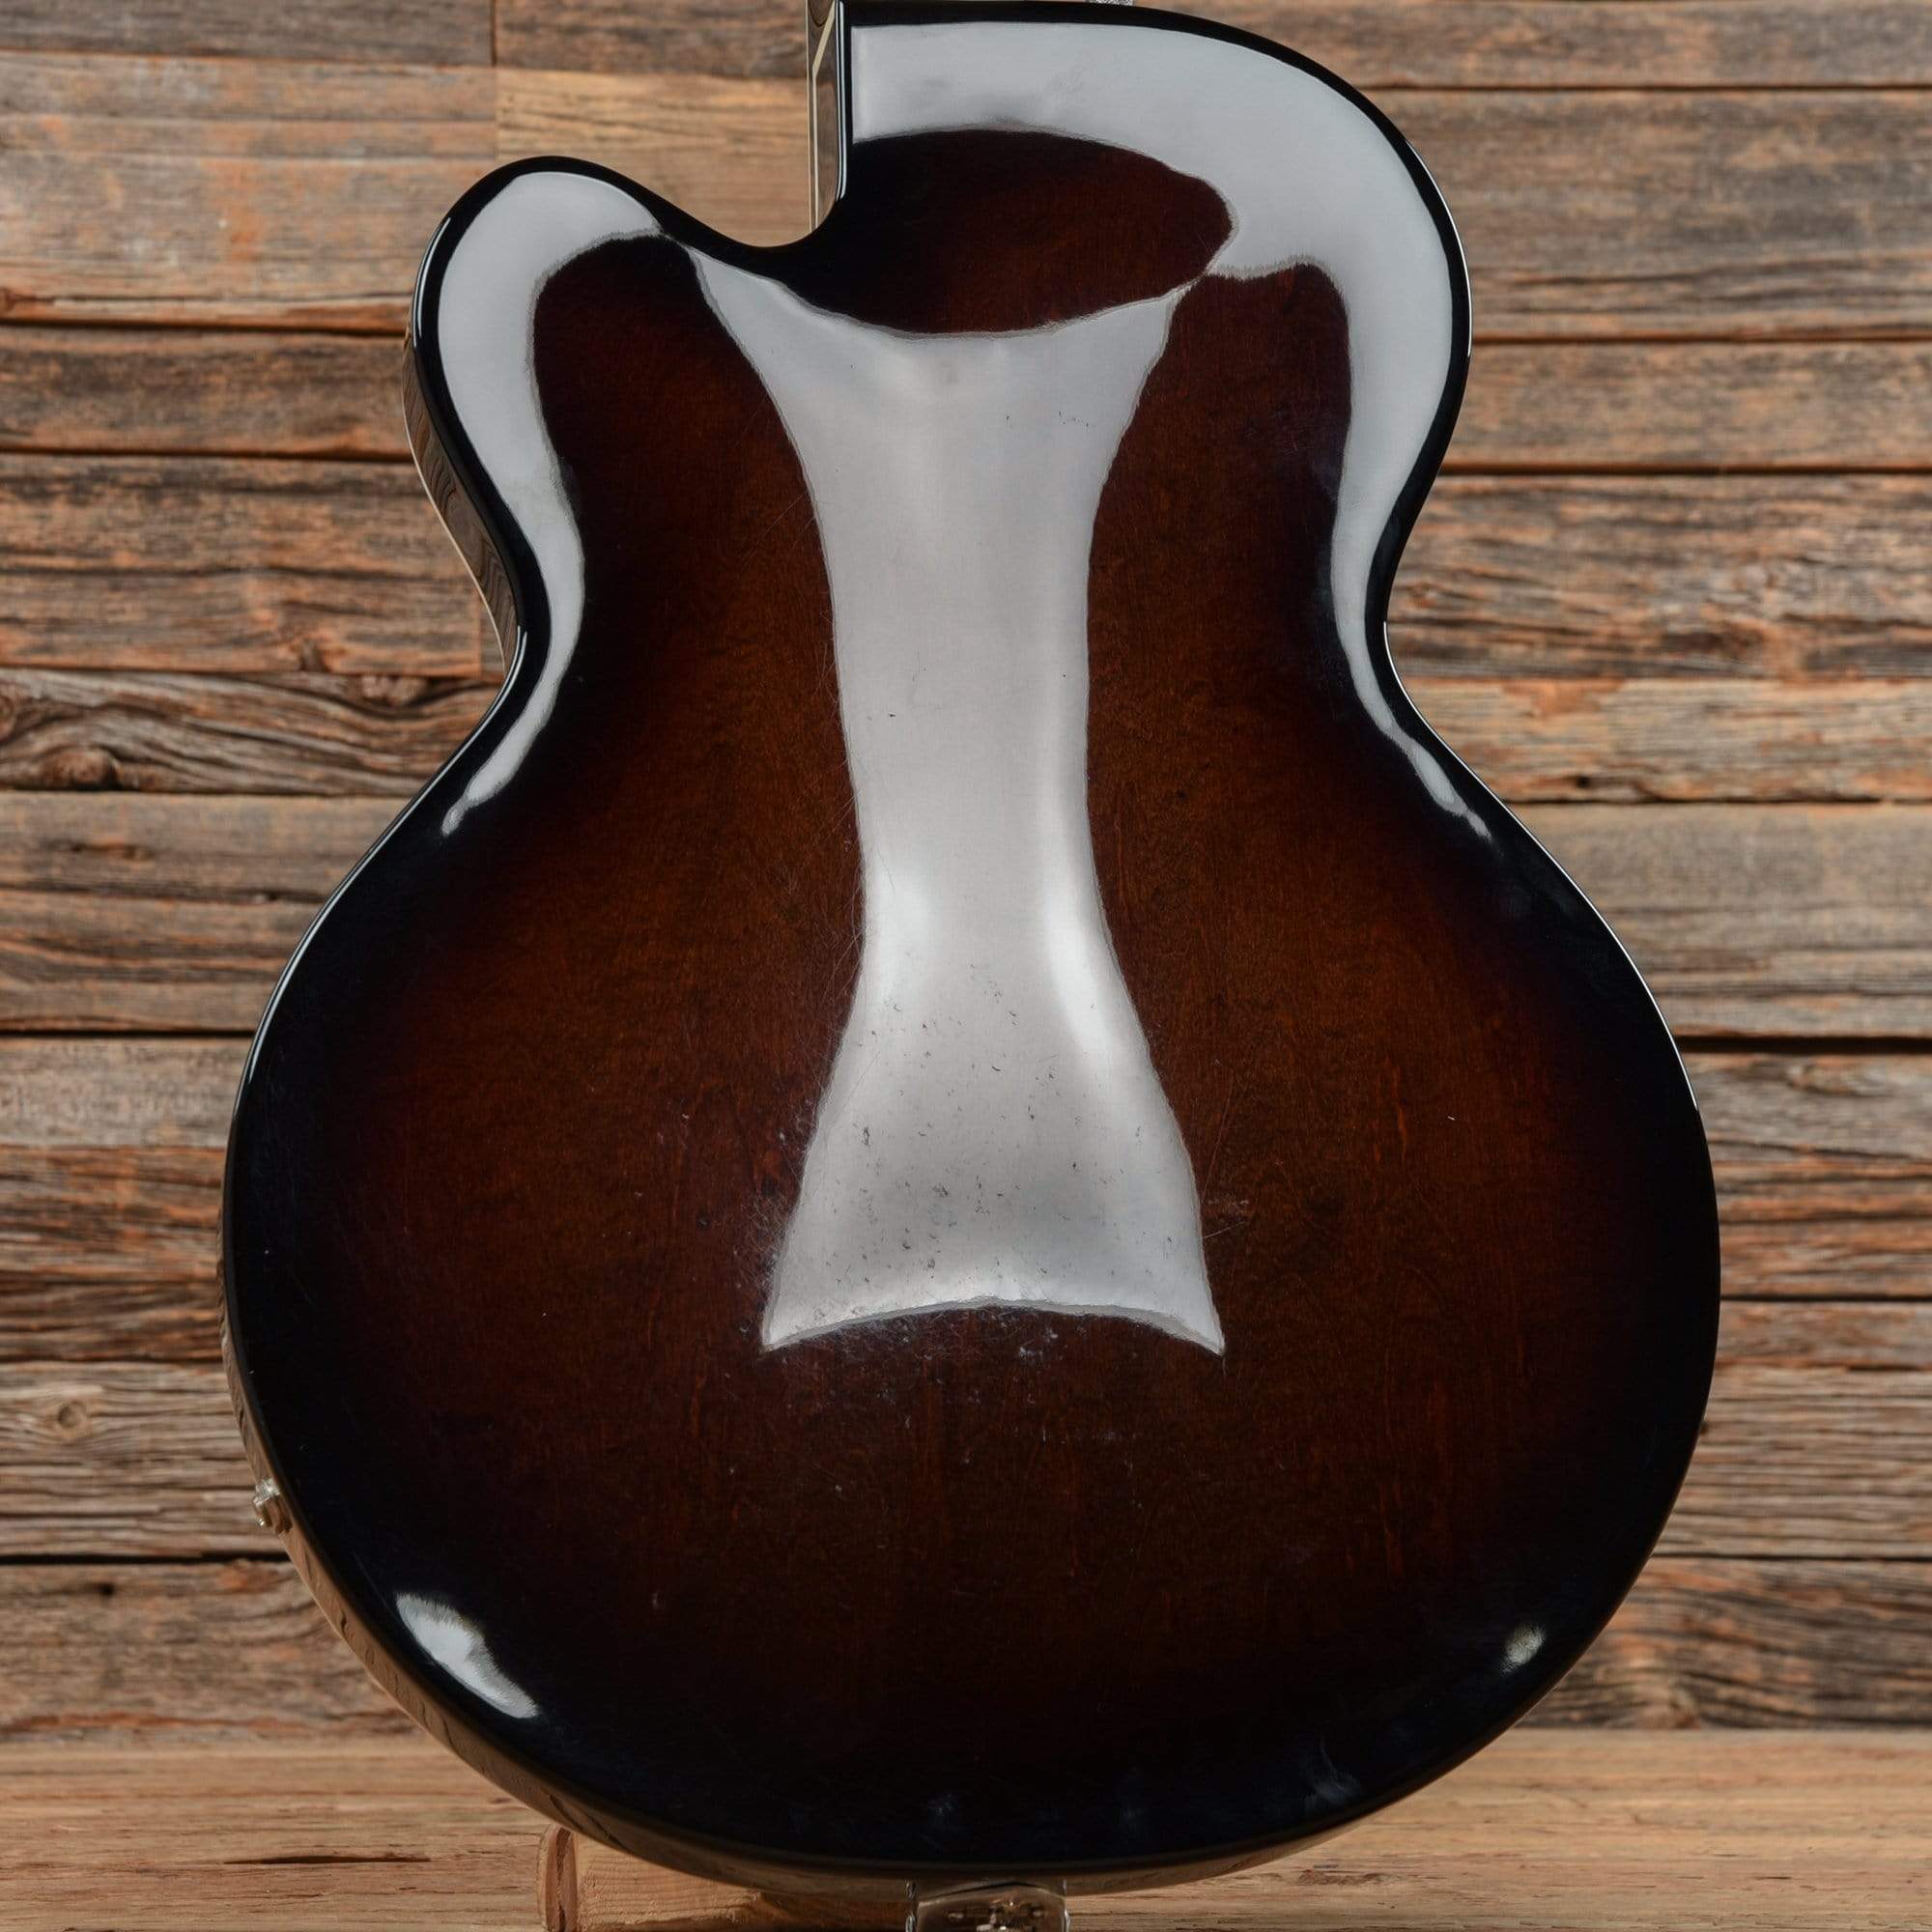 Gretsch G6119-1962 Chet Atkins Tennessee Rose Burgundy 2006 Electric Guitars / Hollow Body